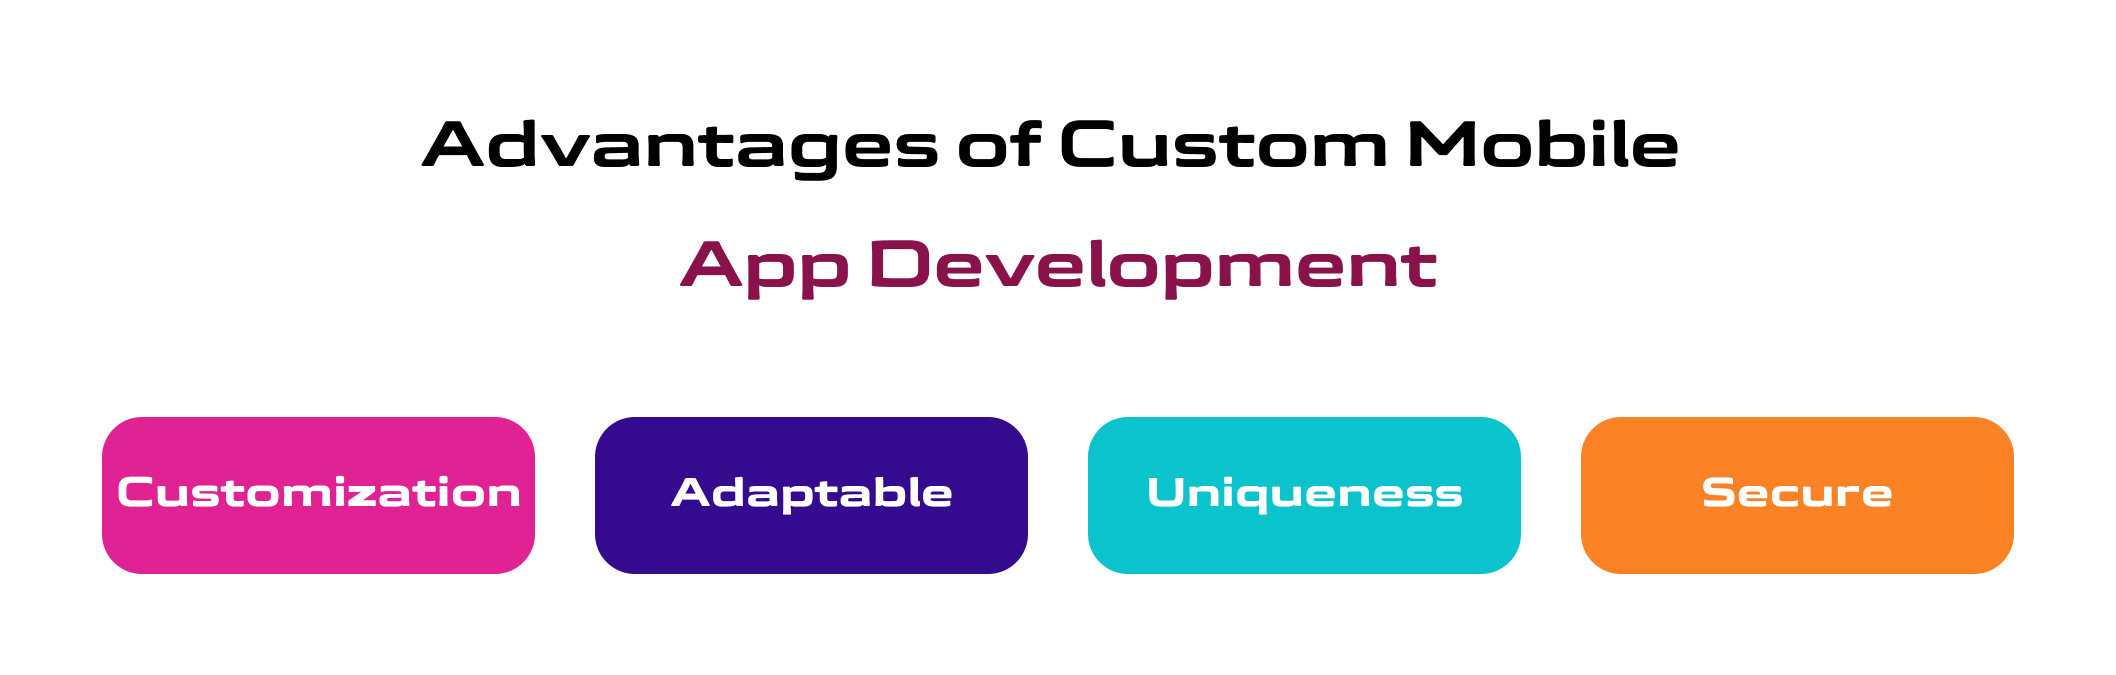 Advantages of Custom Mobile App Development